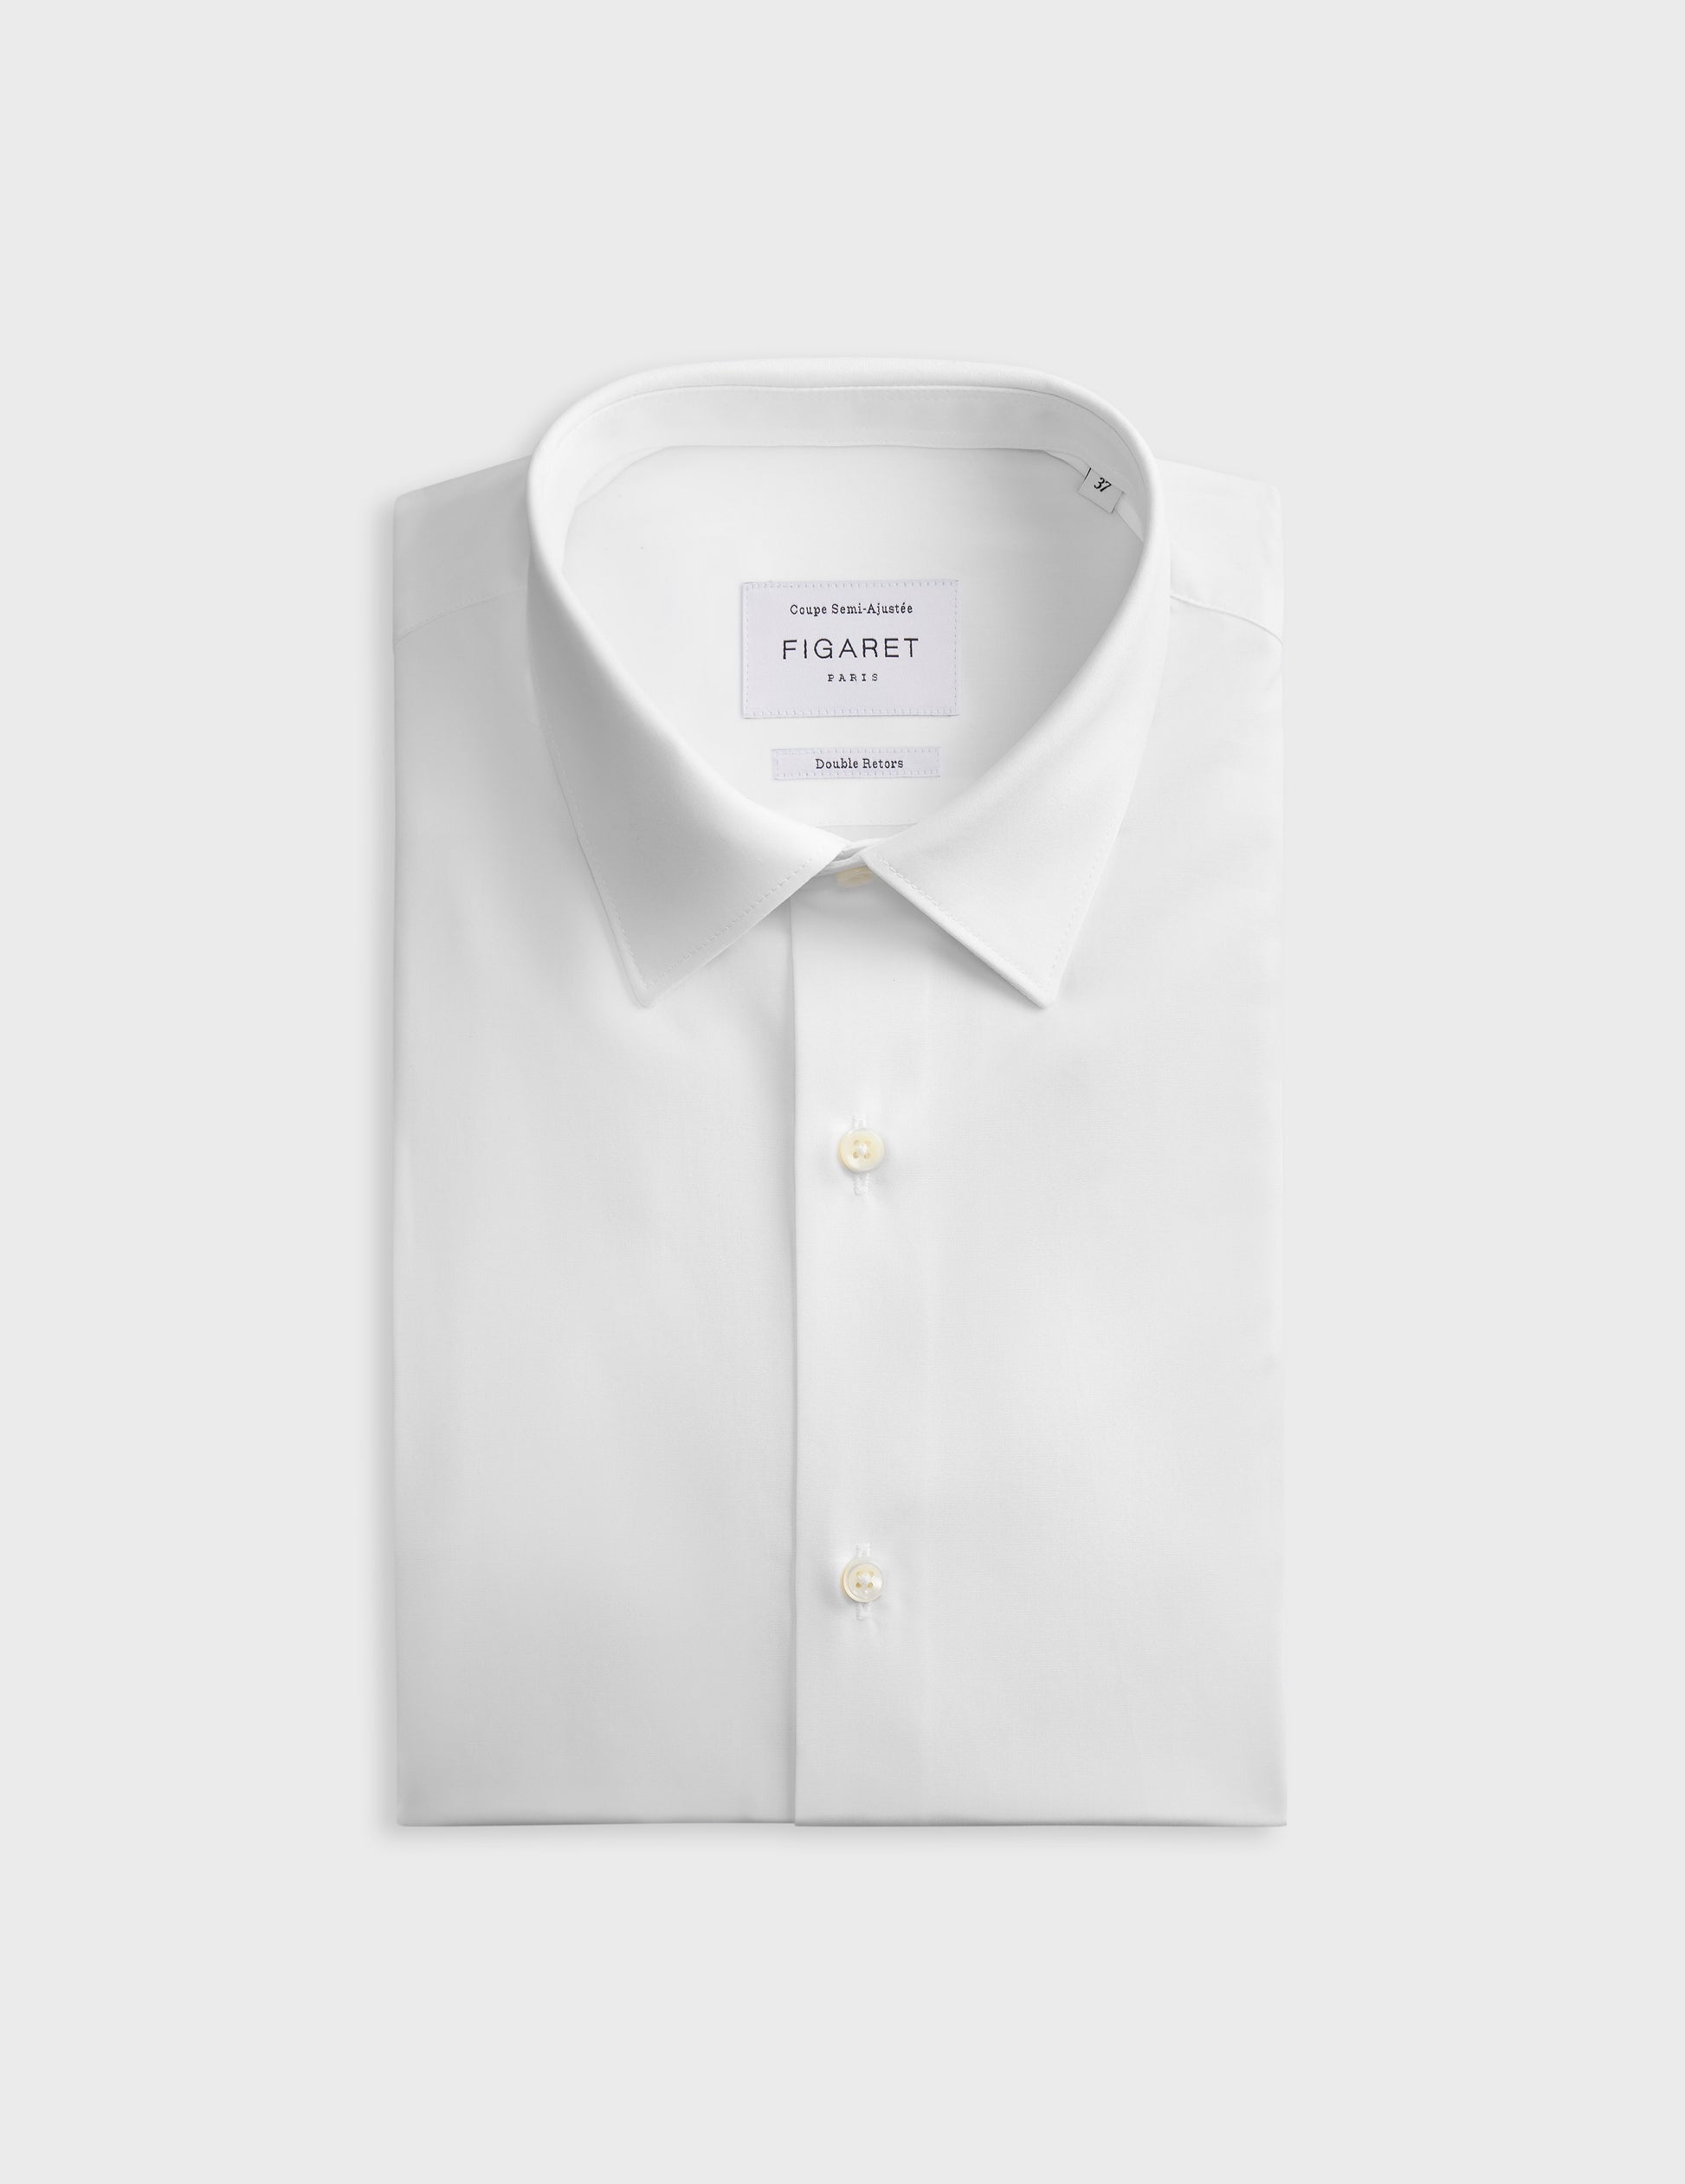 Semi-fitted white shirt - Poplin - Figaret Collar